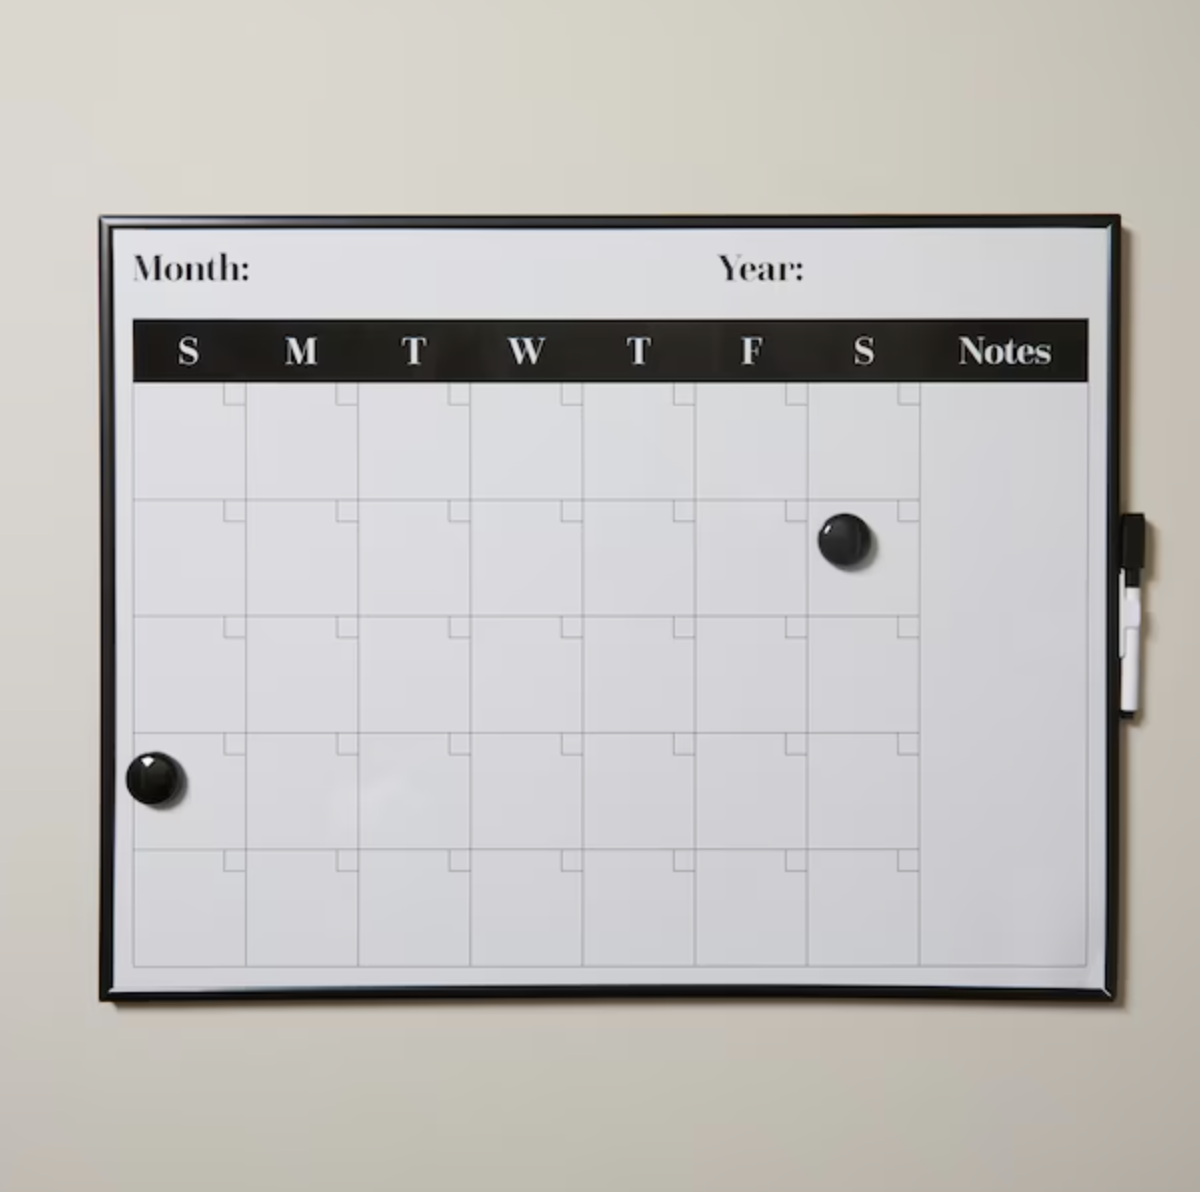 a dry erase calendar on a blank background